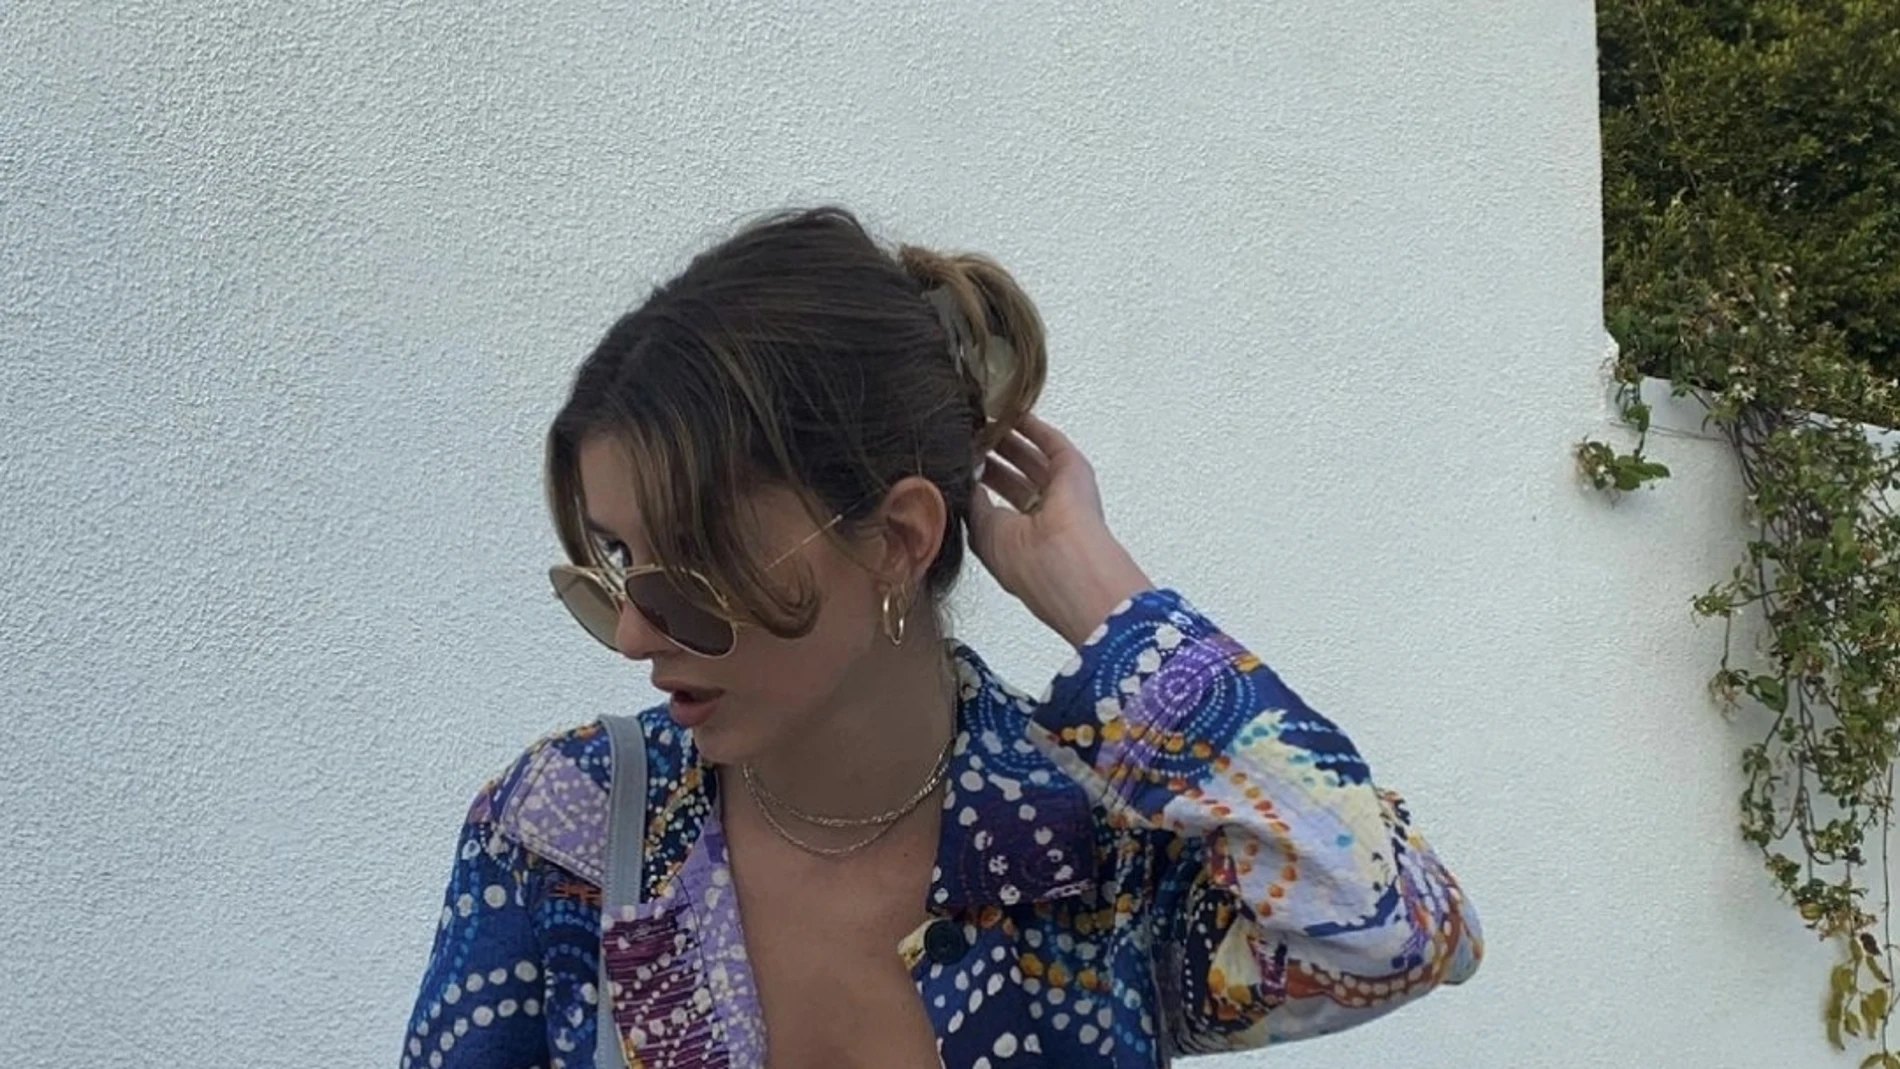 Olivia Rouyre con sencillo peinado con pinza/ Instagram @oliviarouyre